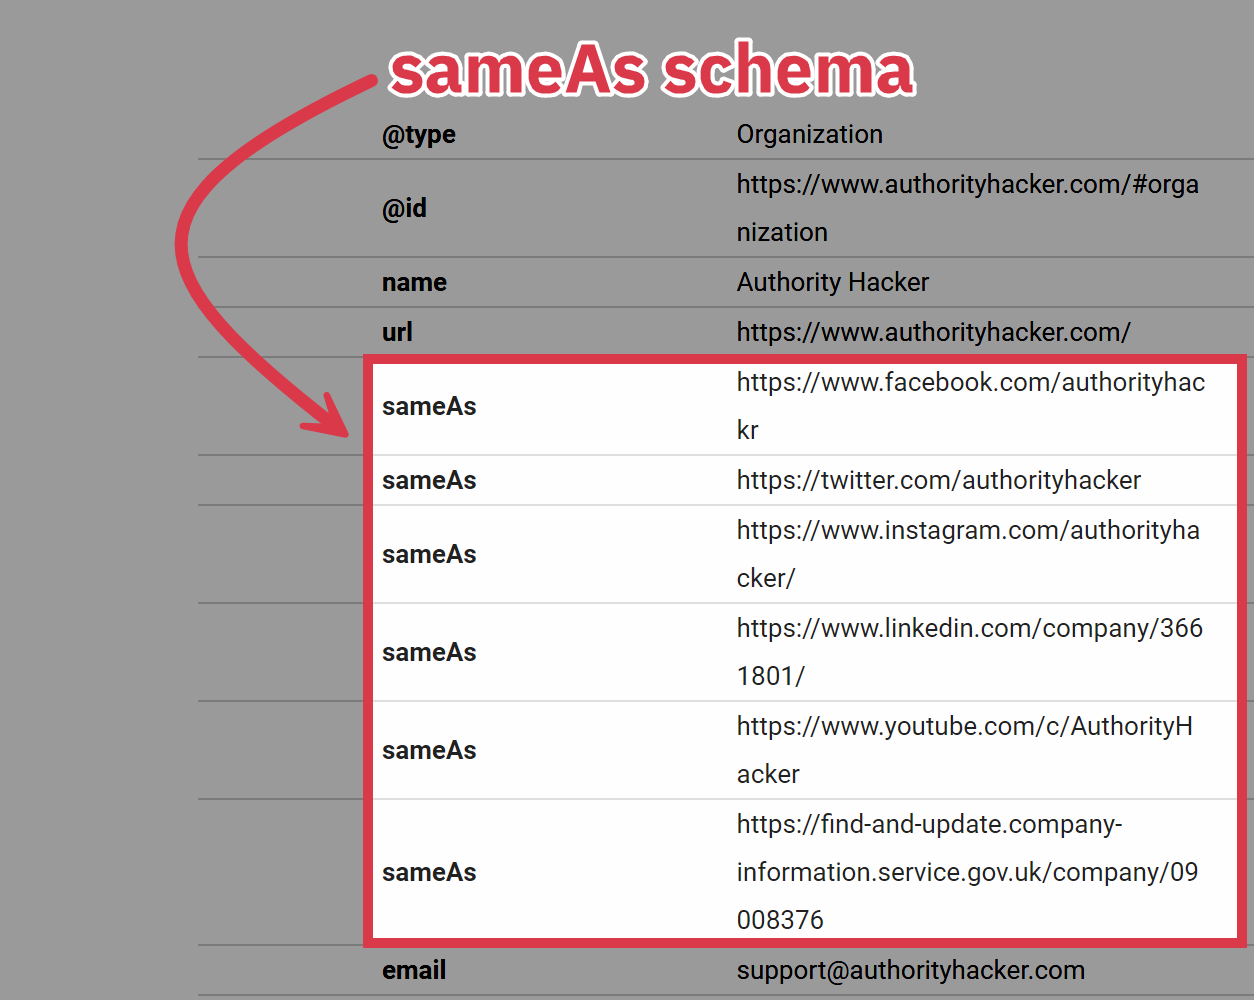 Authority Hacker's sameAs schema